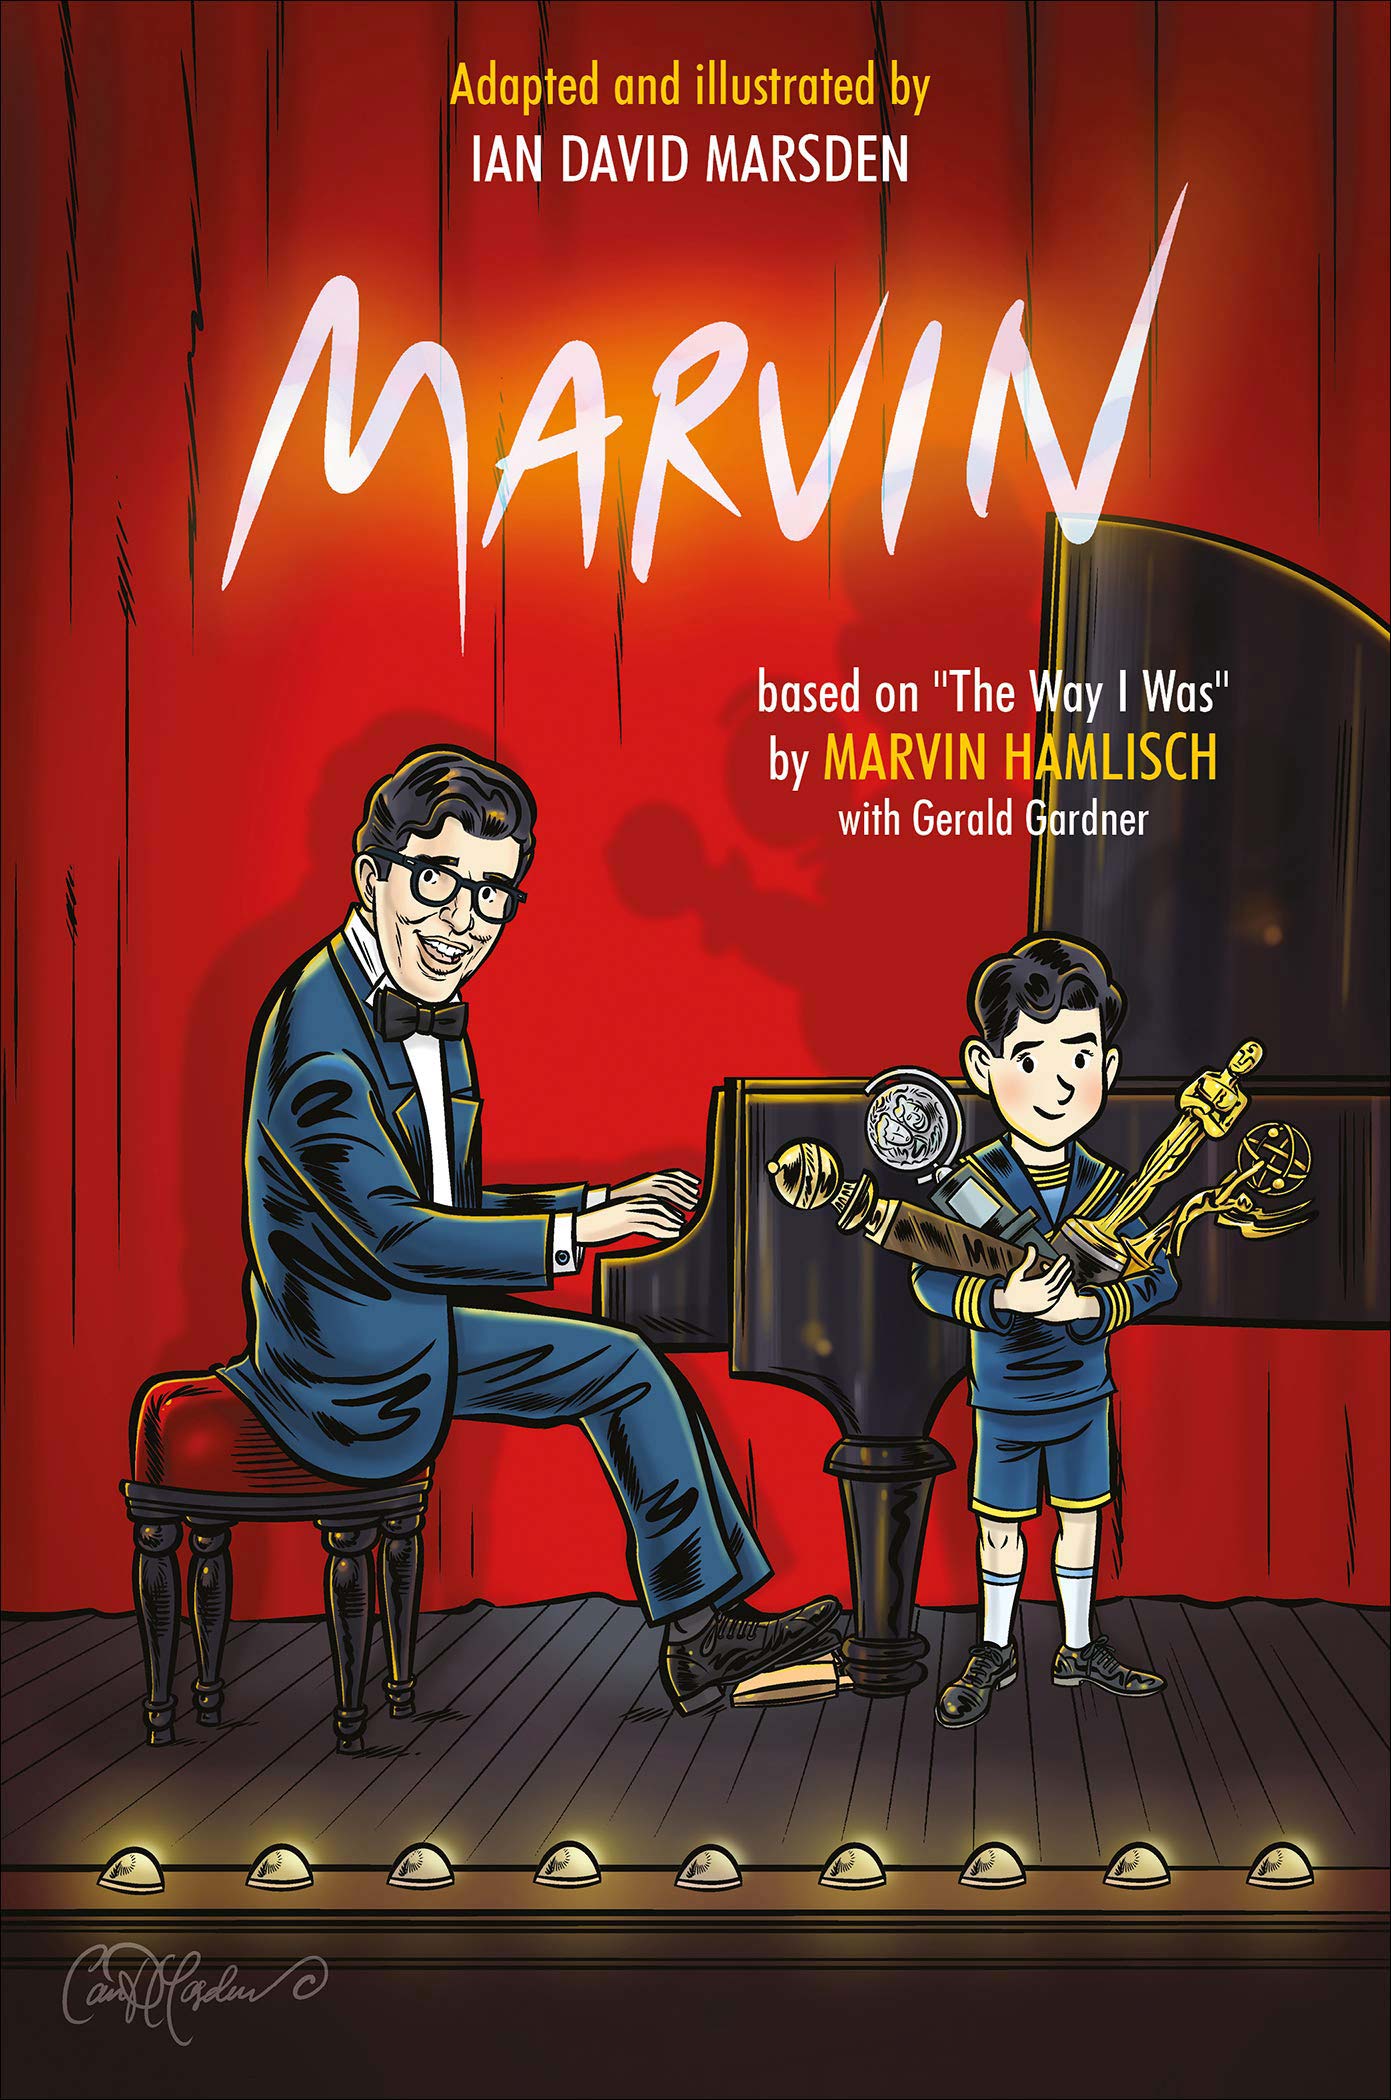 Featured image for “Read Ian David Marsden’s New Graphic Novel <i>Marvin</i> TODAY!”